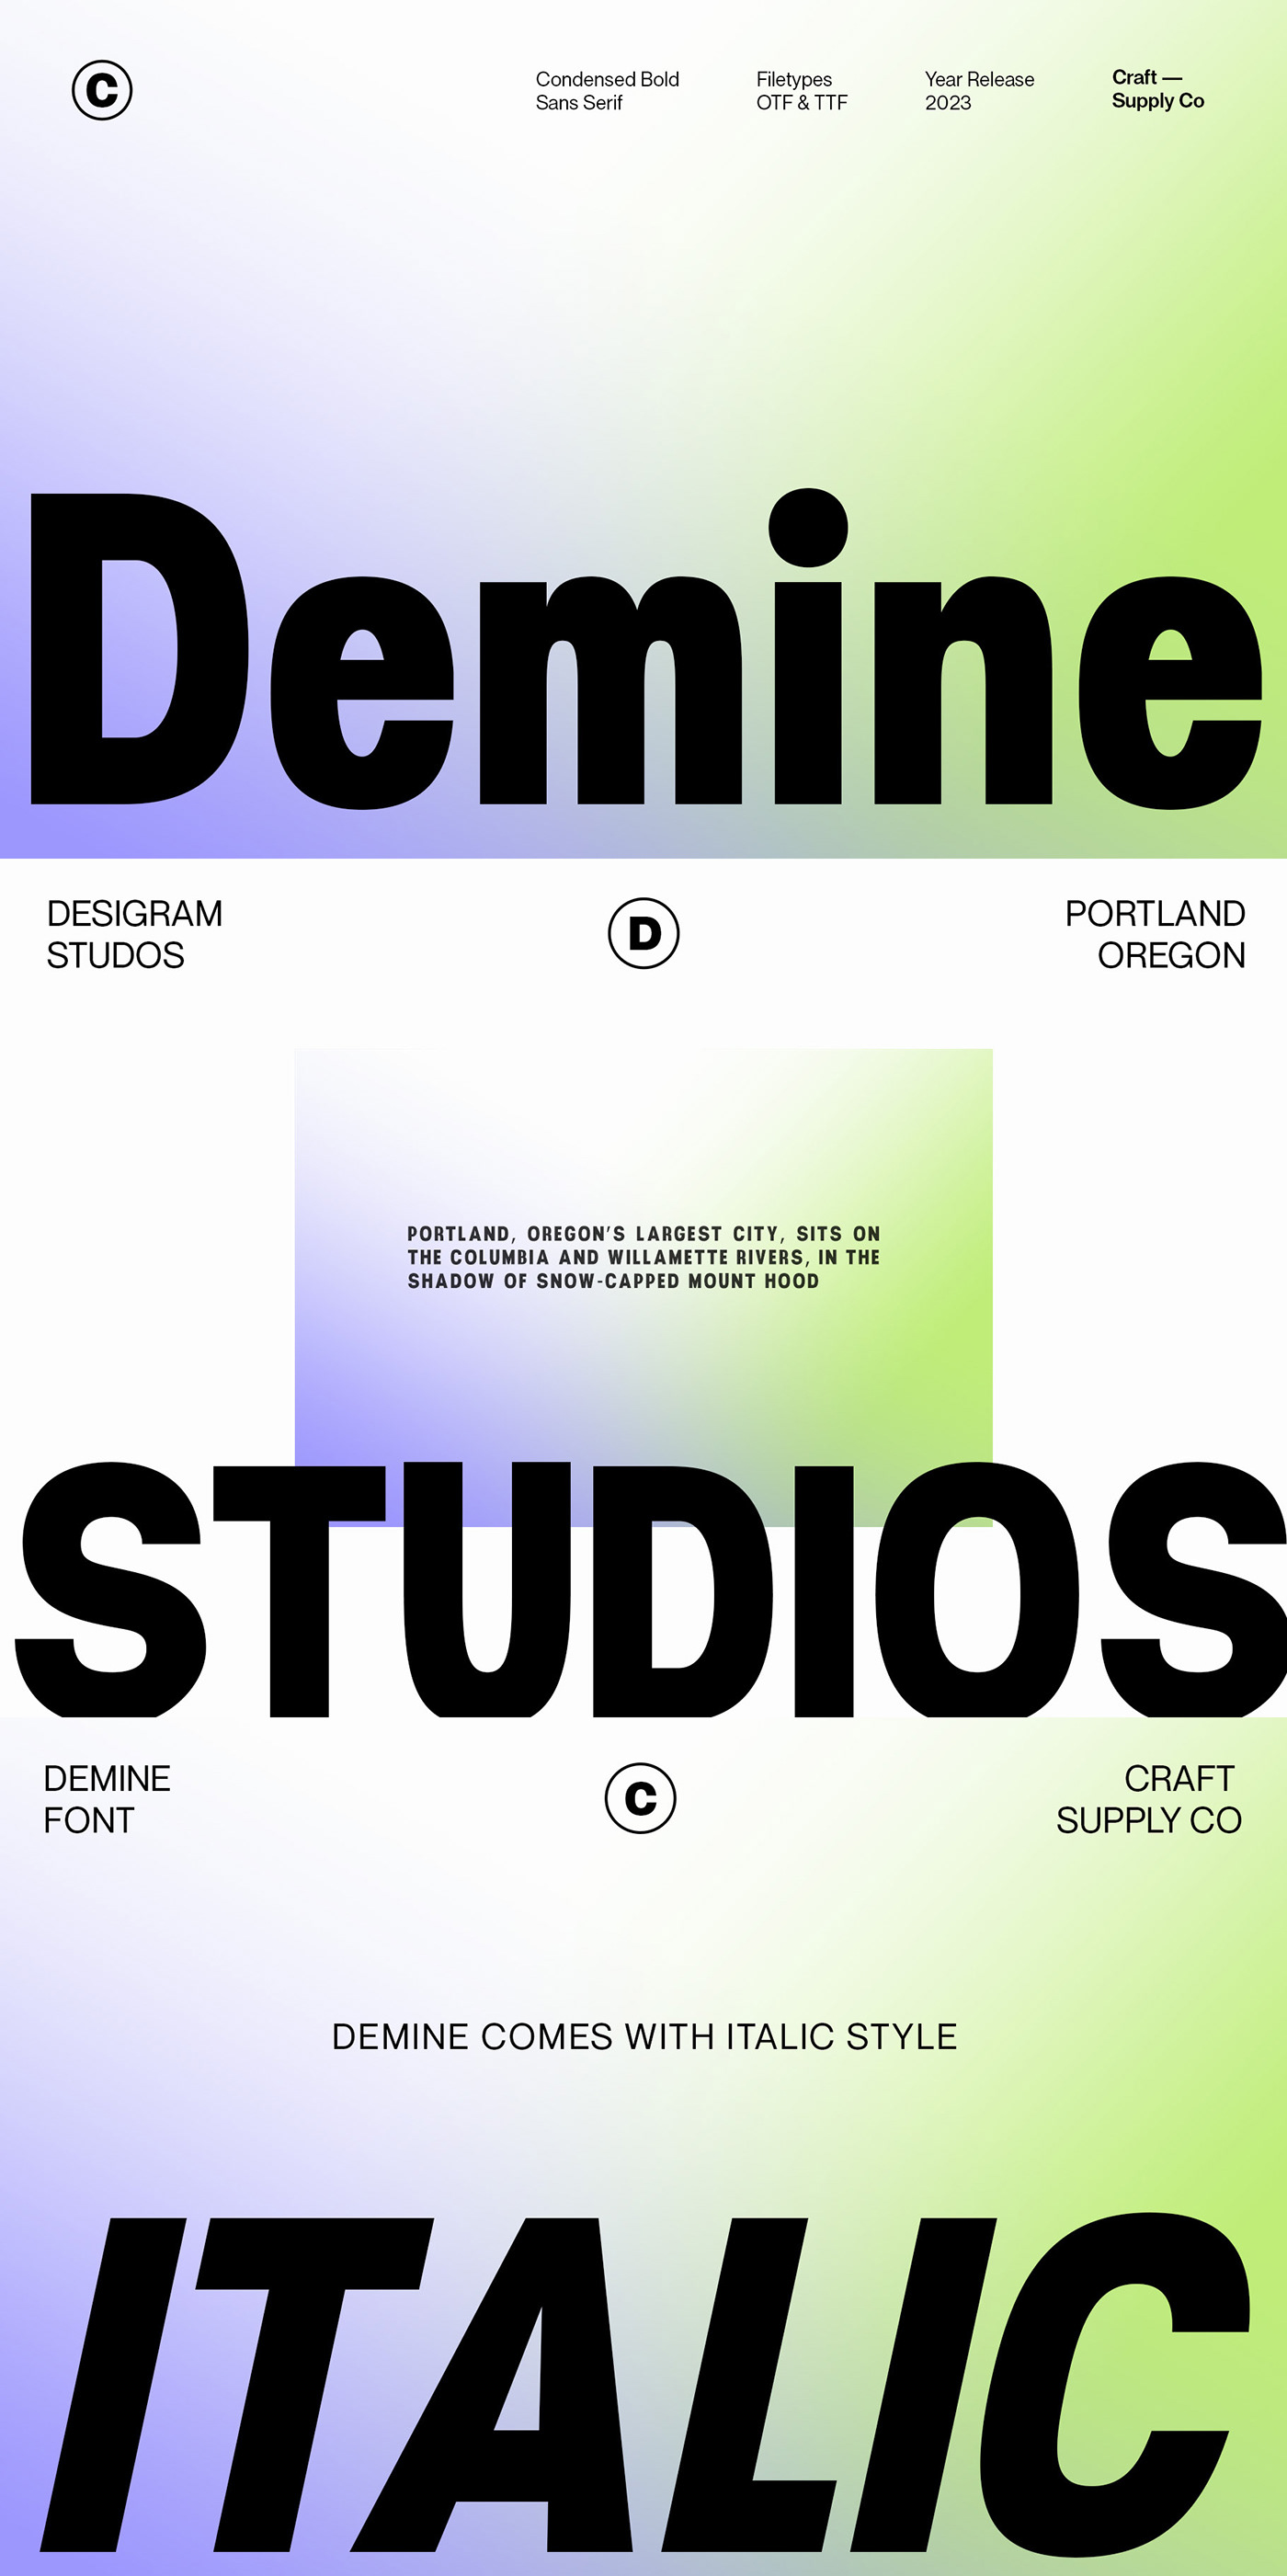 sans serif bold condensed Typeface typography   type design brand identity Advertising  marketing   editorial